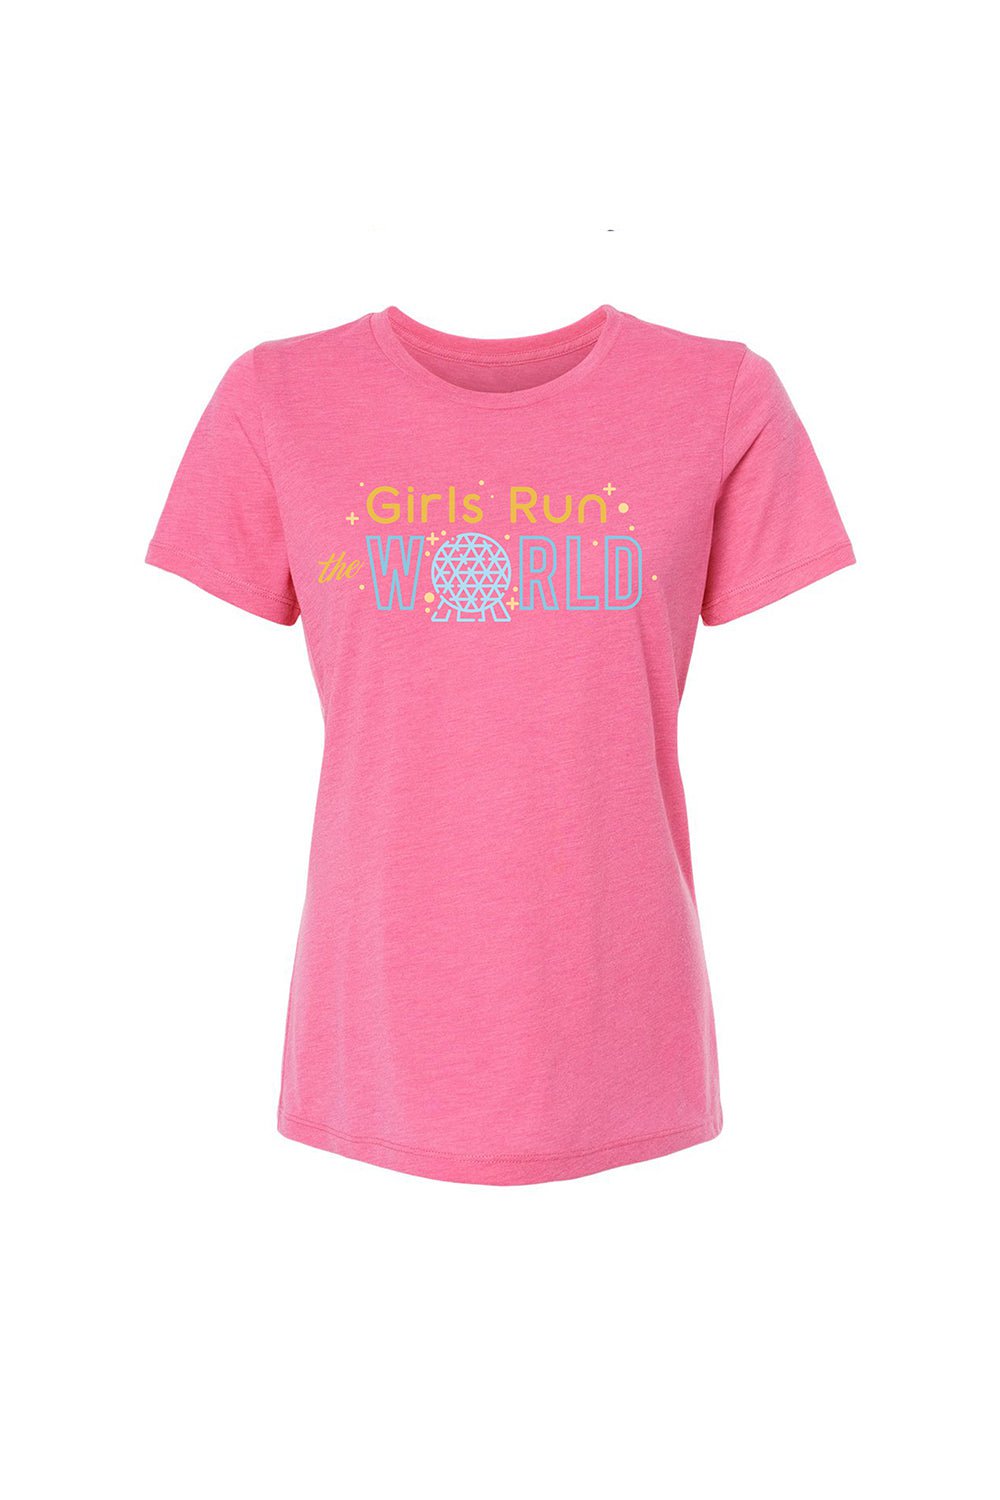 Sarah Marie Design Studio Women's Tee Small / Pink Girls Run The World Women's T-shirt